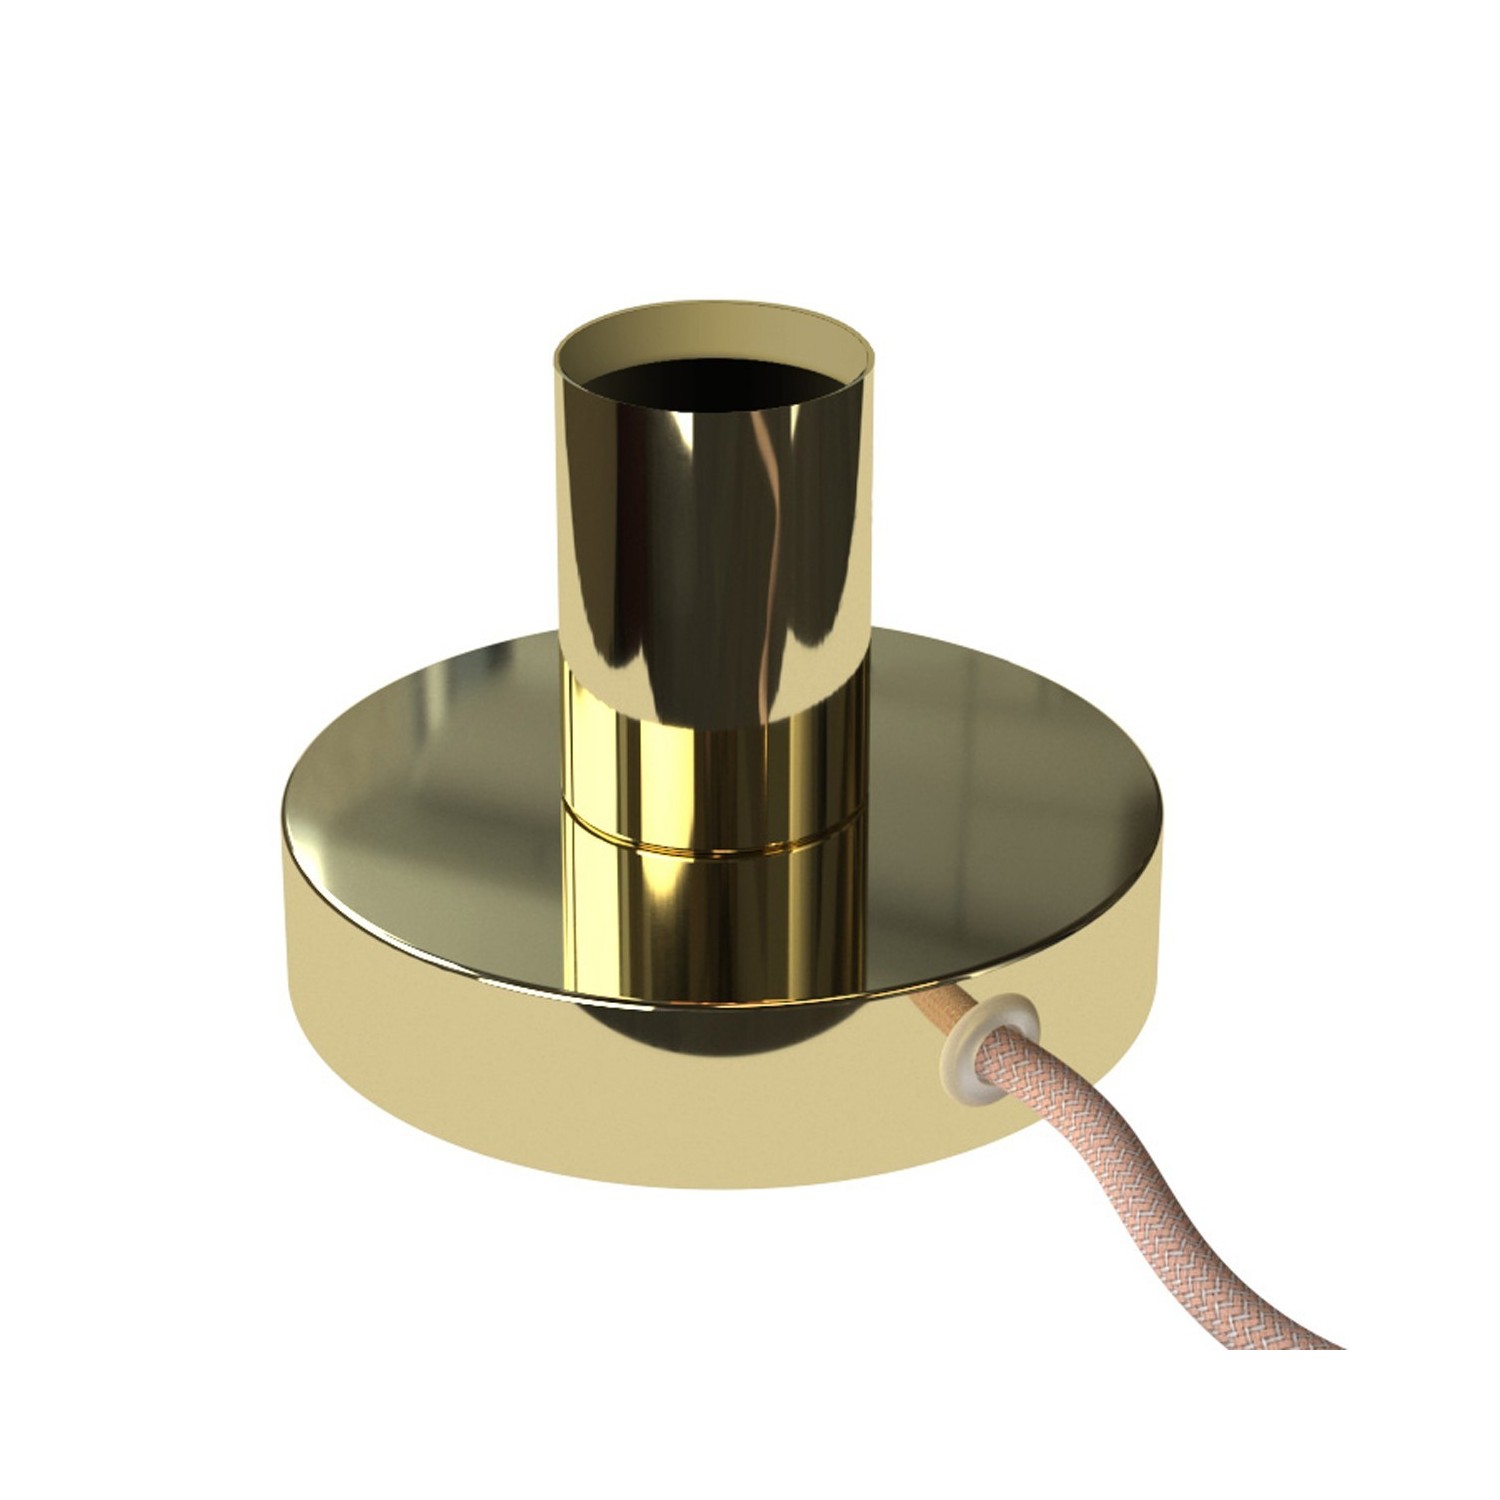 Posaluce - Metal table lamp